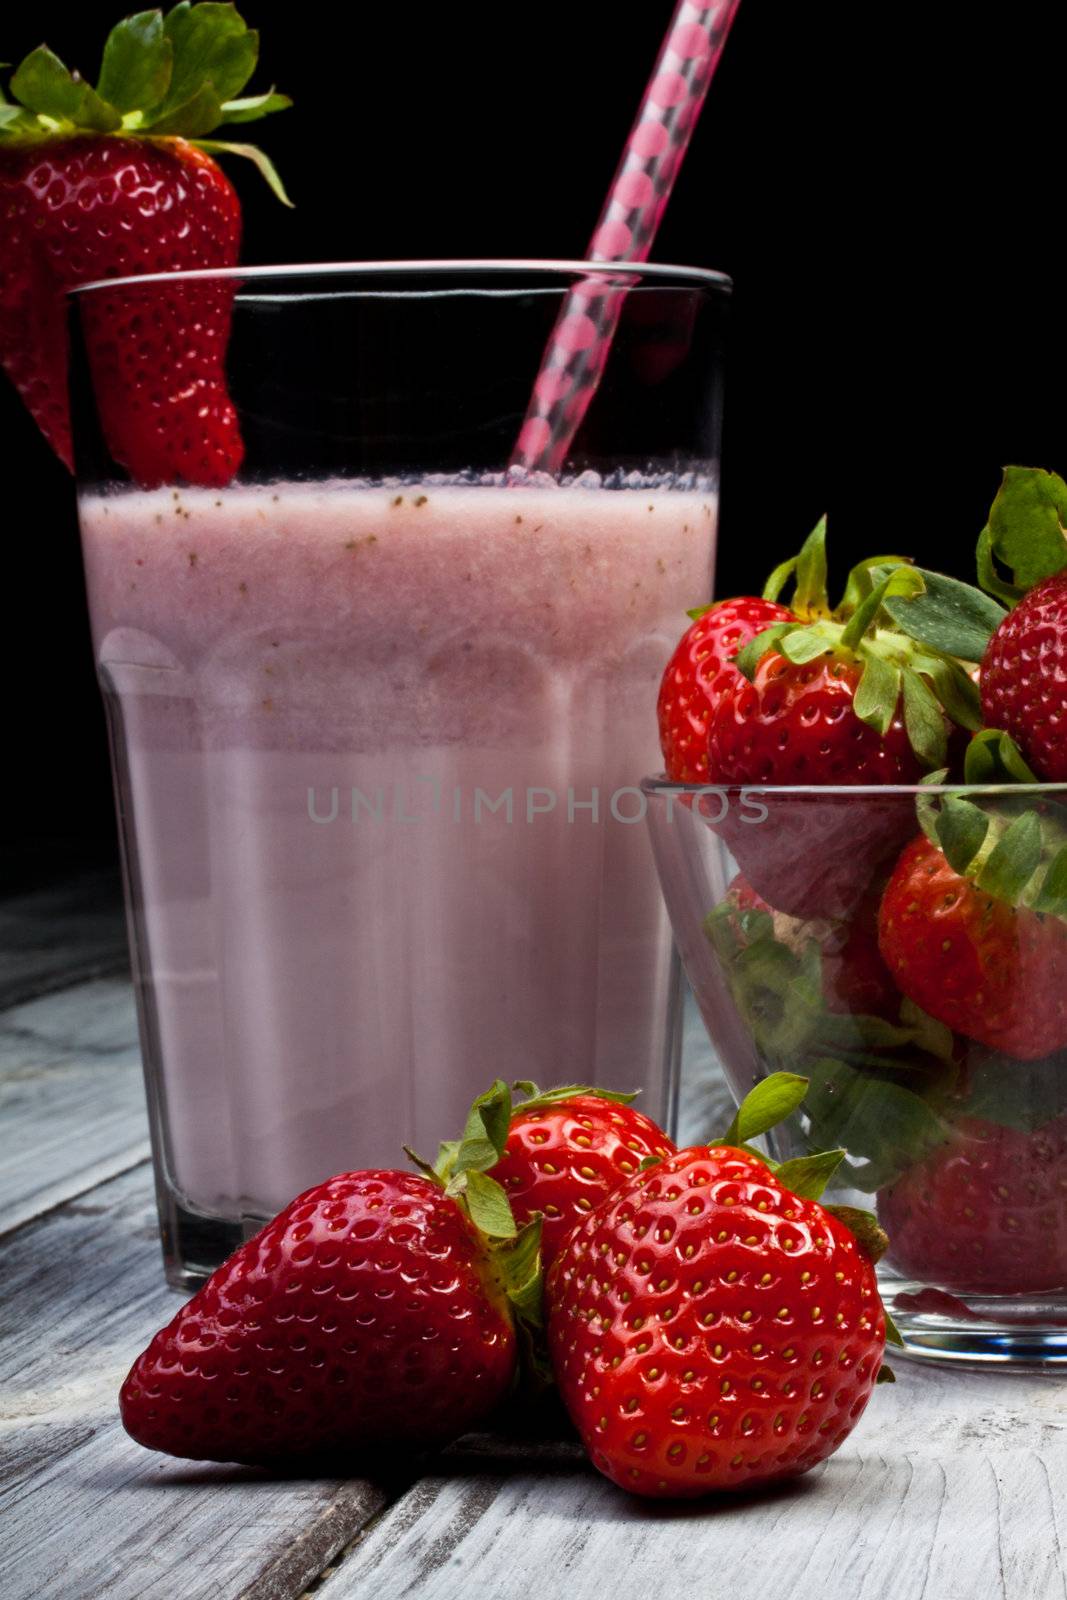 strawberry milkshake with whole strawberry on side